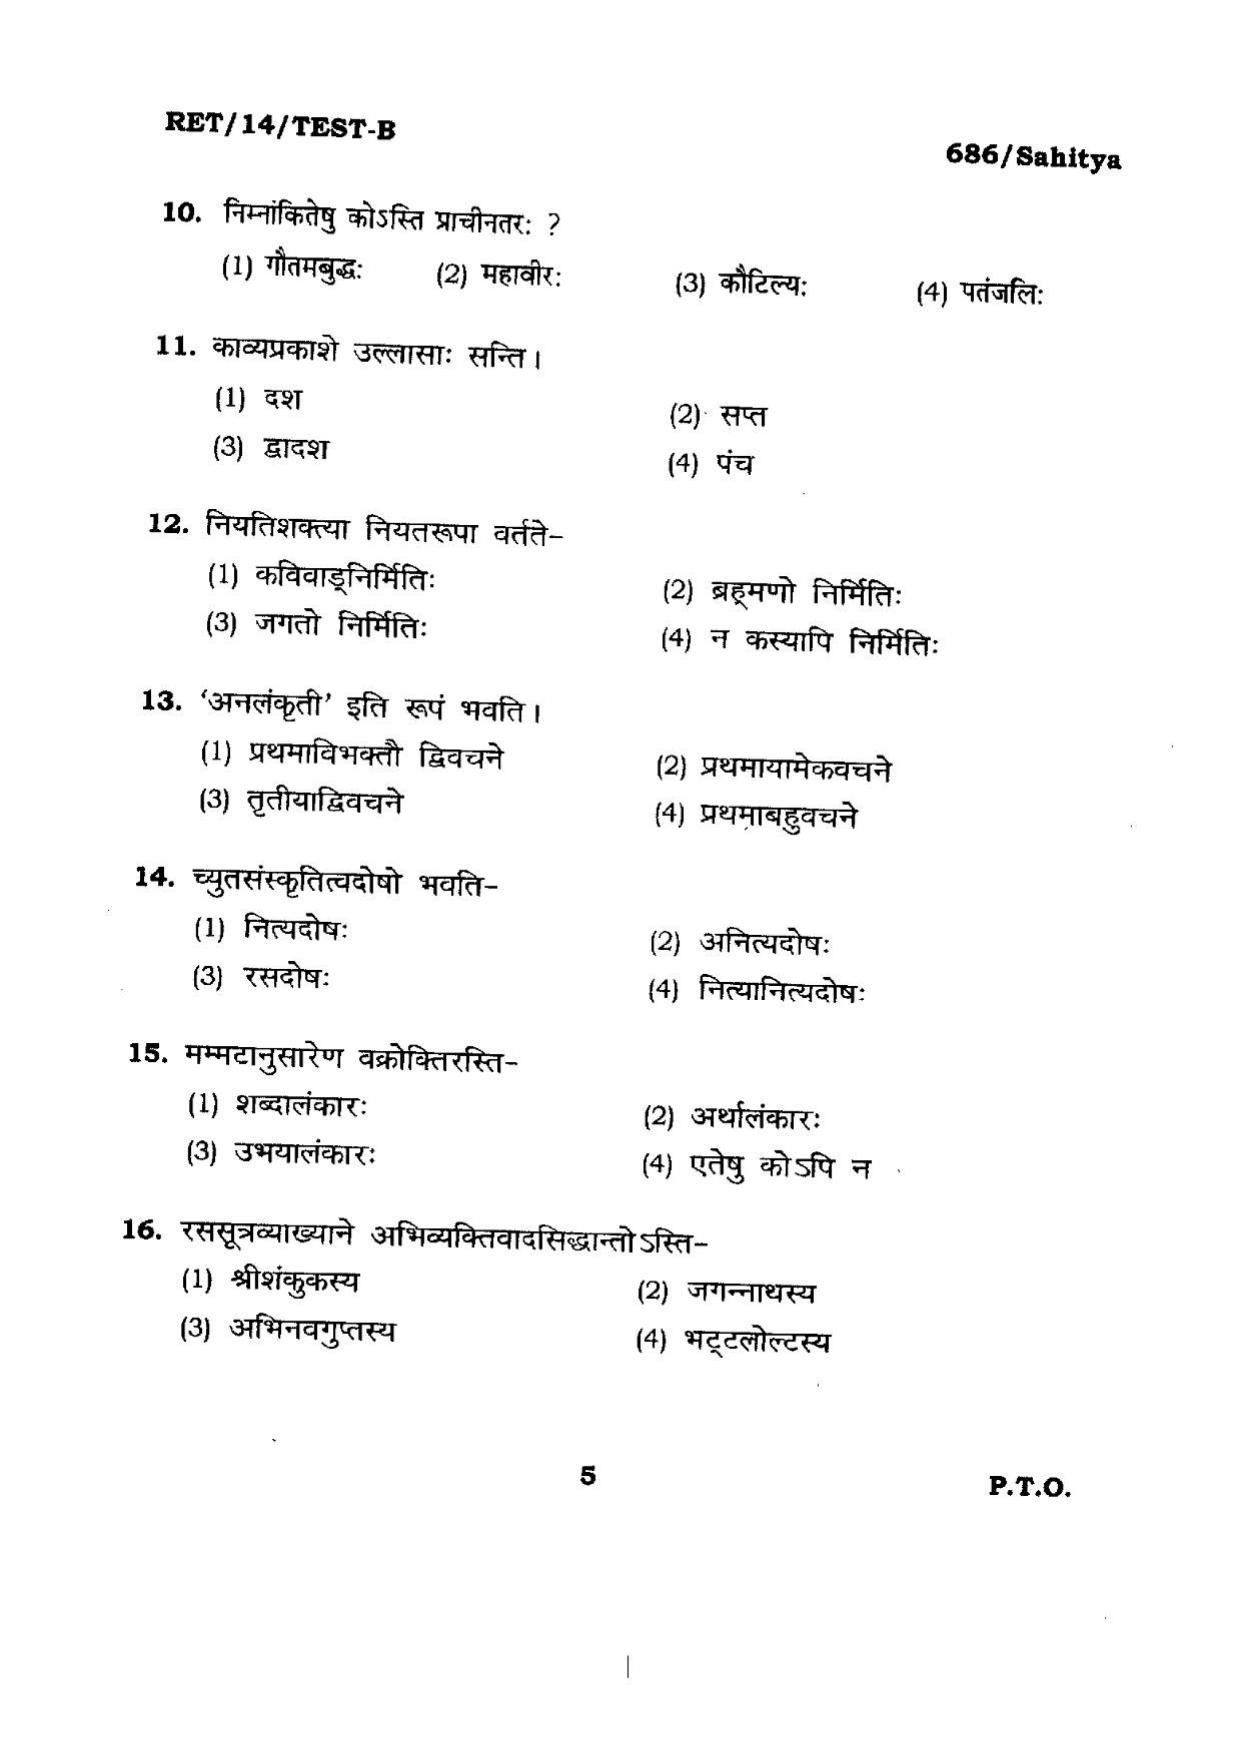 BHU RET Sahitya 2014 Question Paper - Page 5